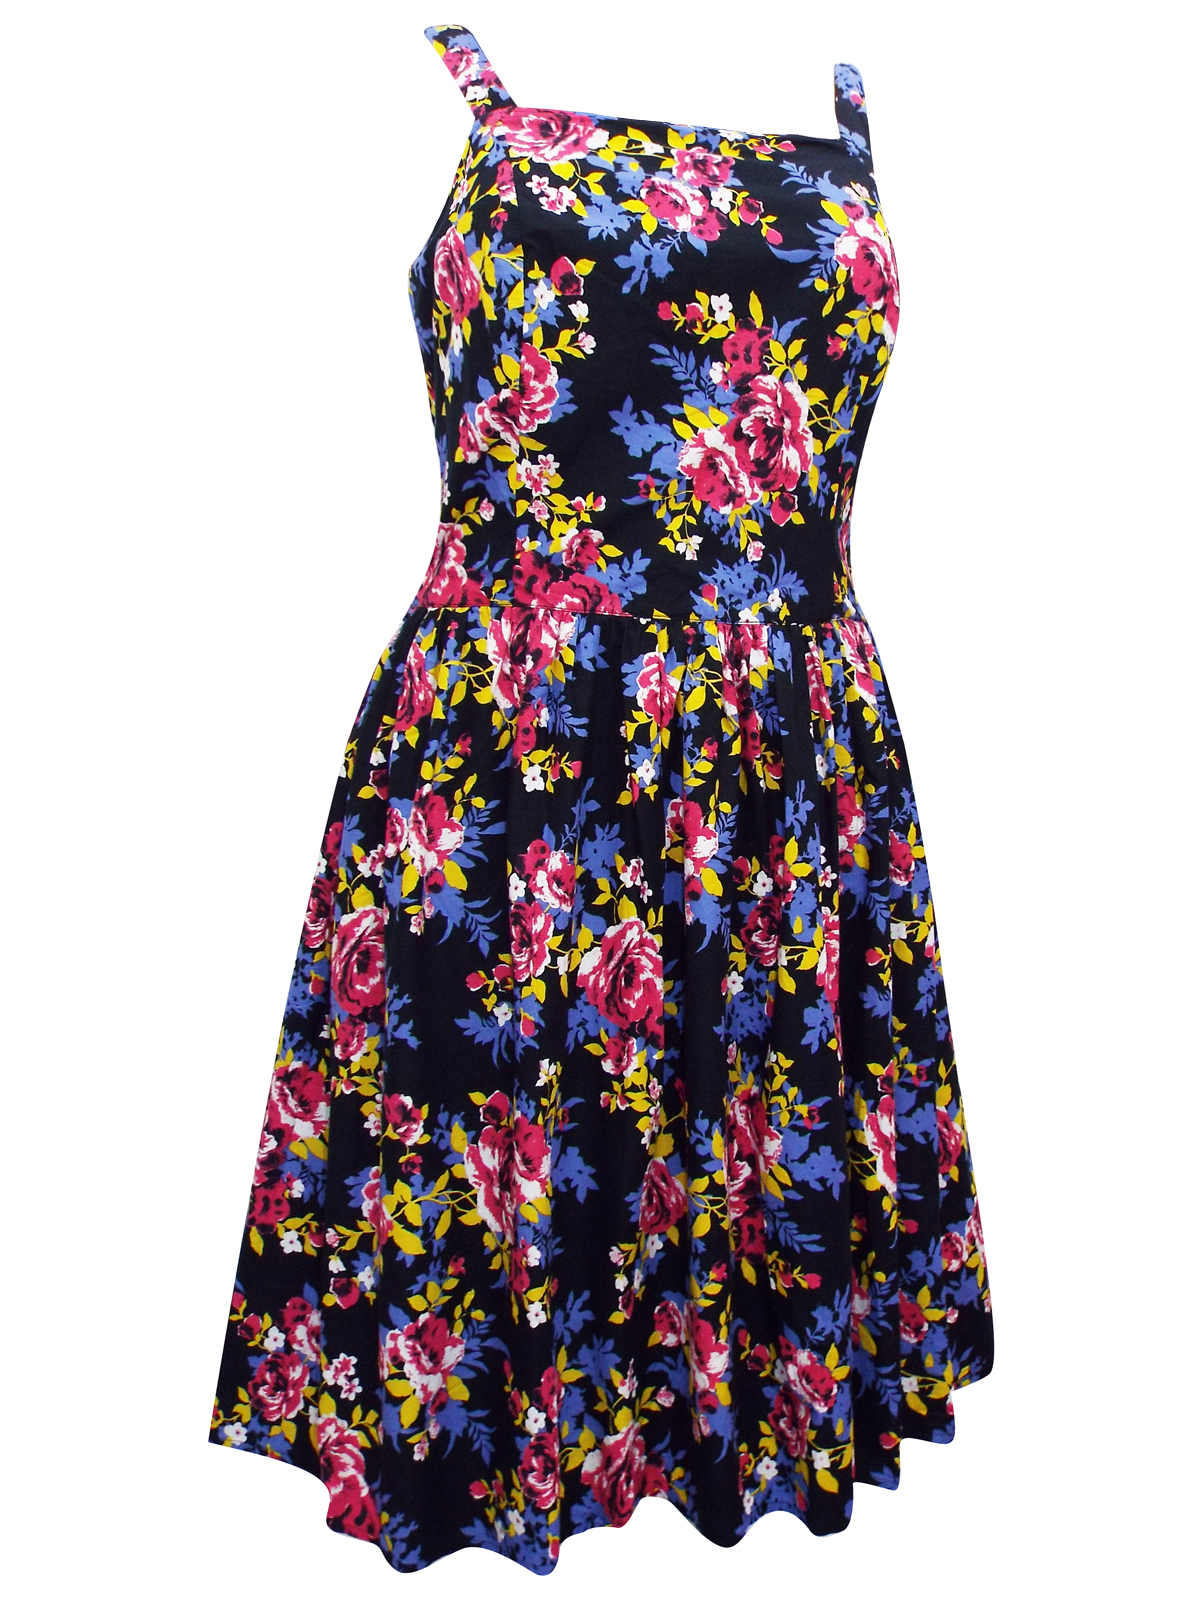 Jessica London - - Jessica London BLACK Floral Print Fit & Flare Dress ...